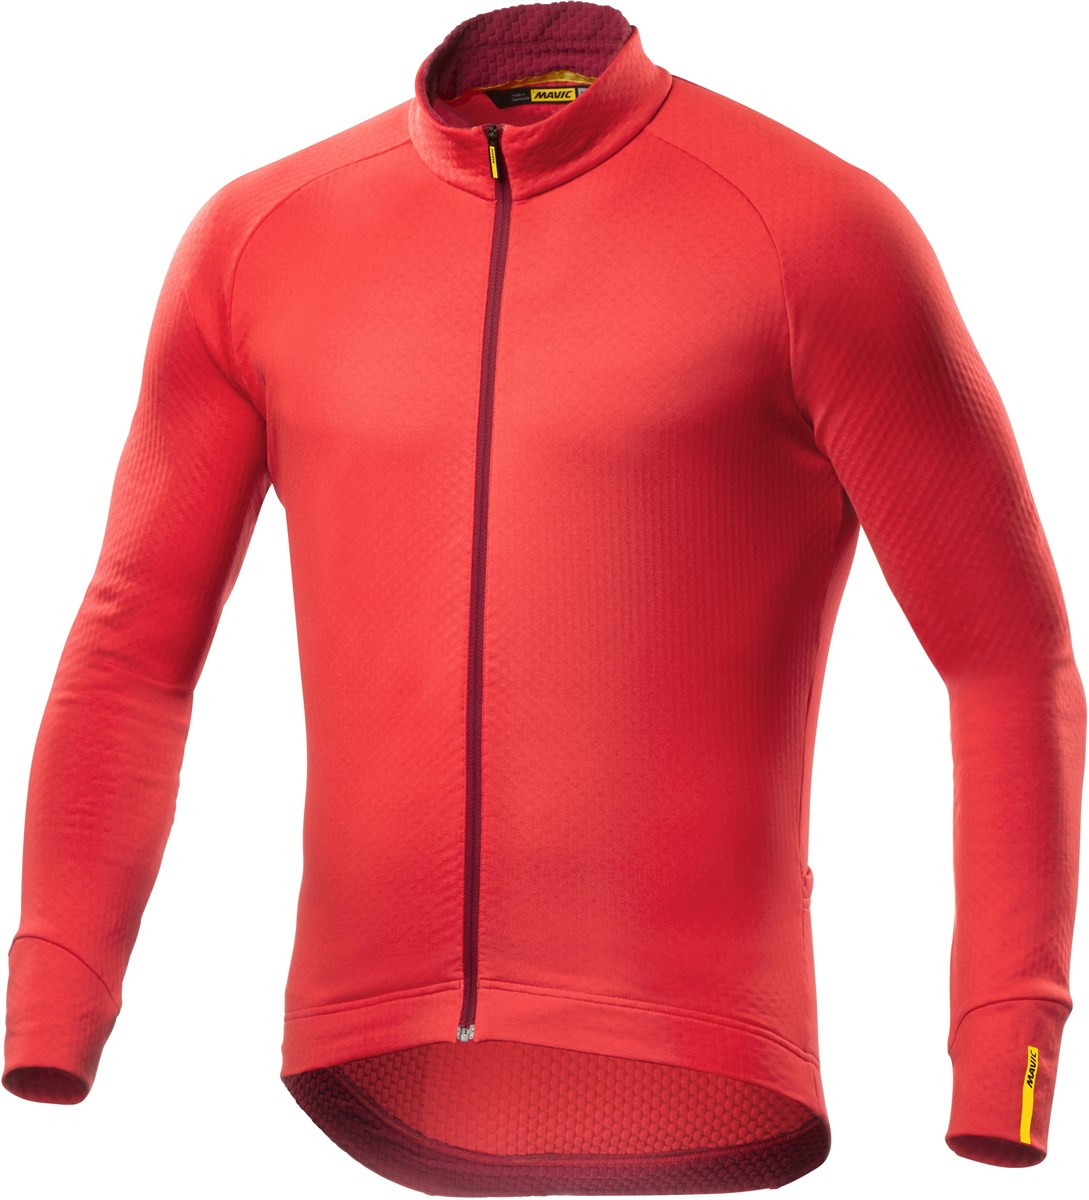 Mavic Aksium Thermo Long Sleeve Cycling Jersey AW16 product image